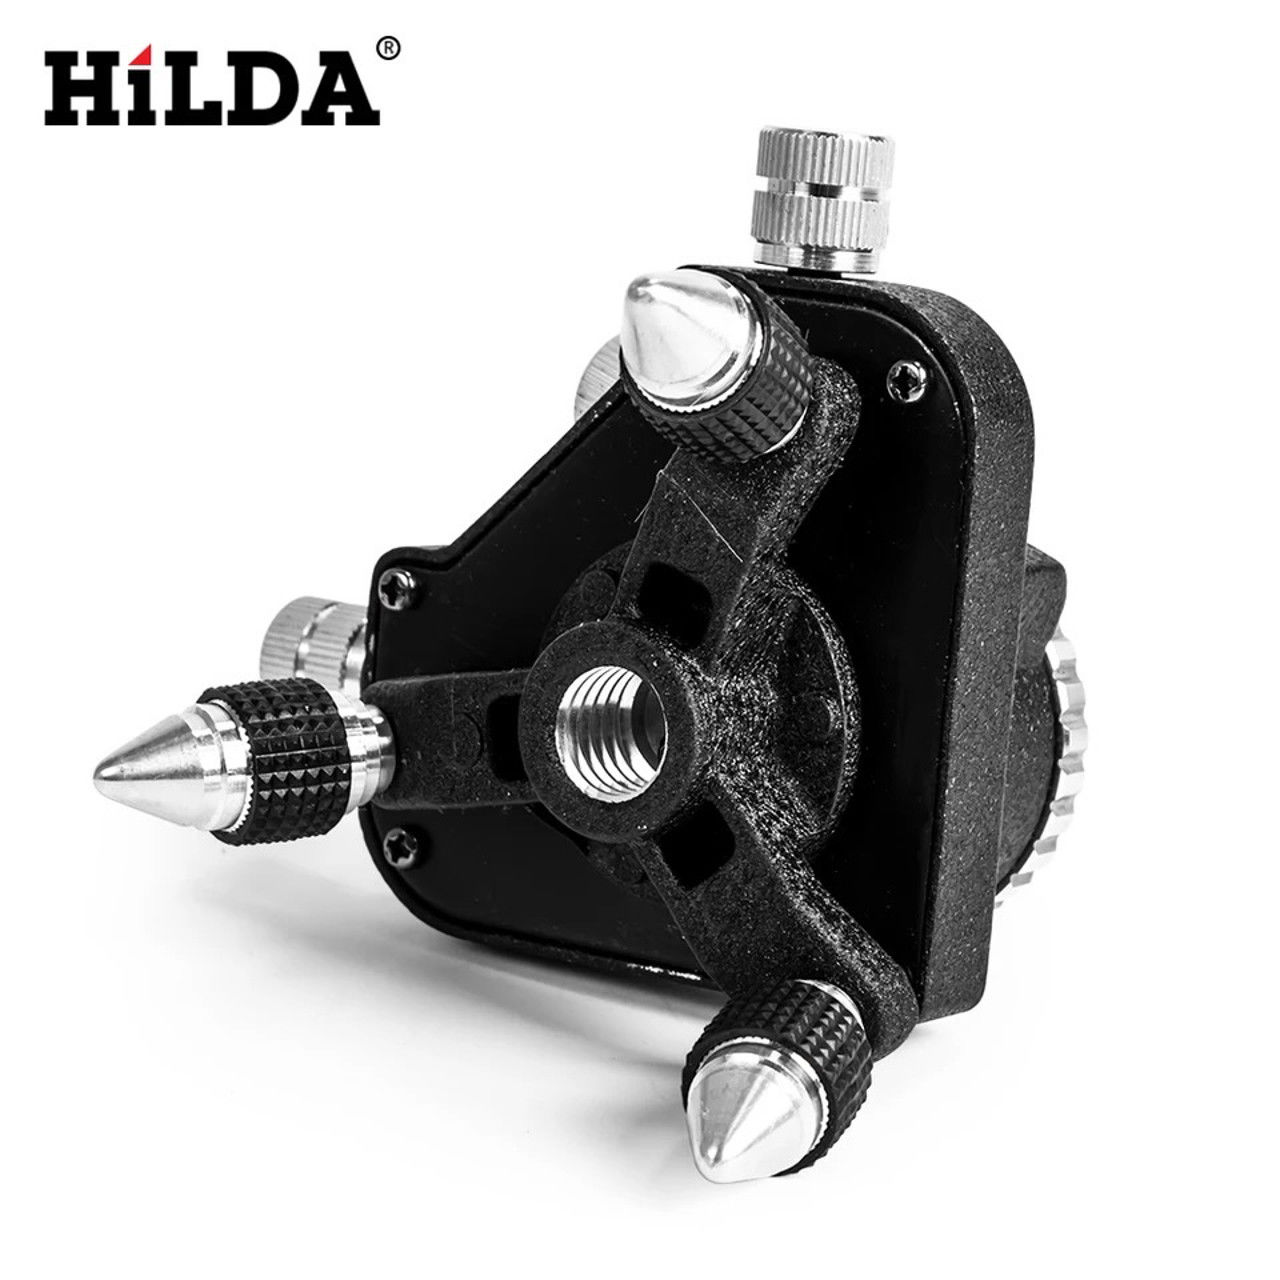 HiLDA / Huepar Mini tripod / трипод / тринога для лазеров фото 3